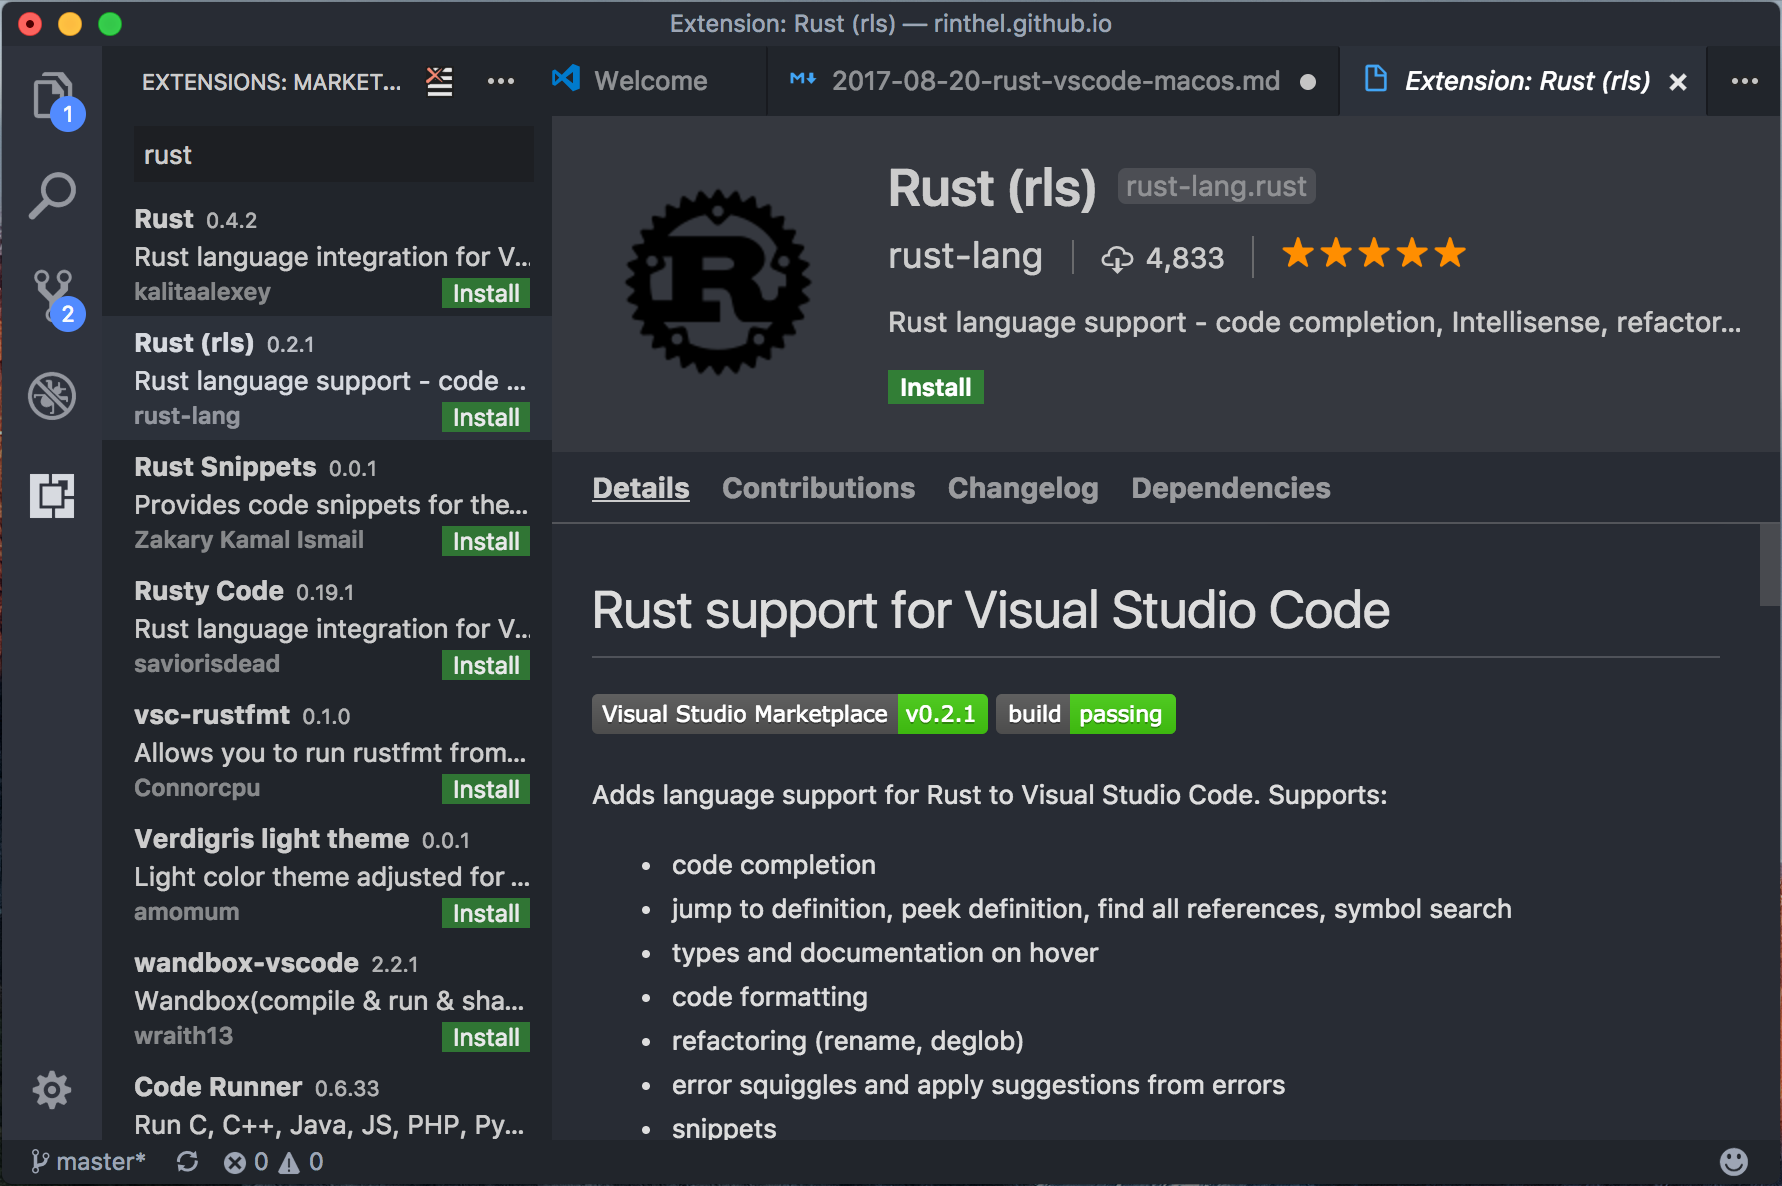 vscode extension - rust rls